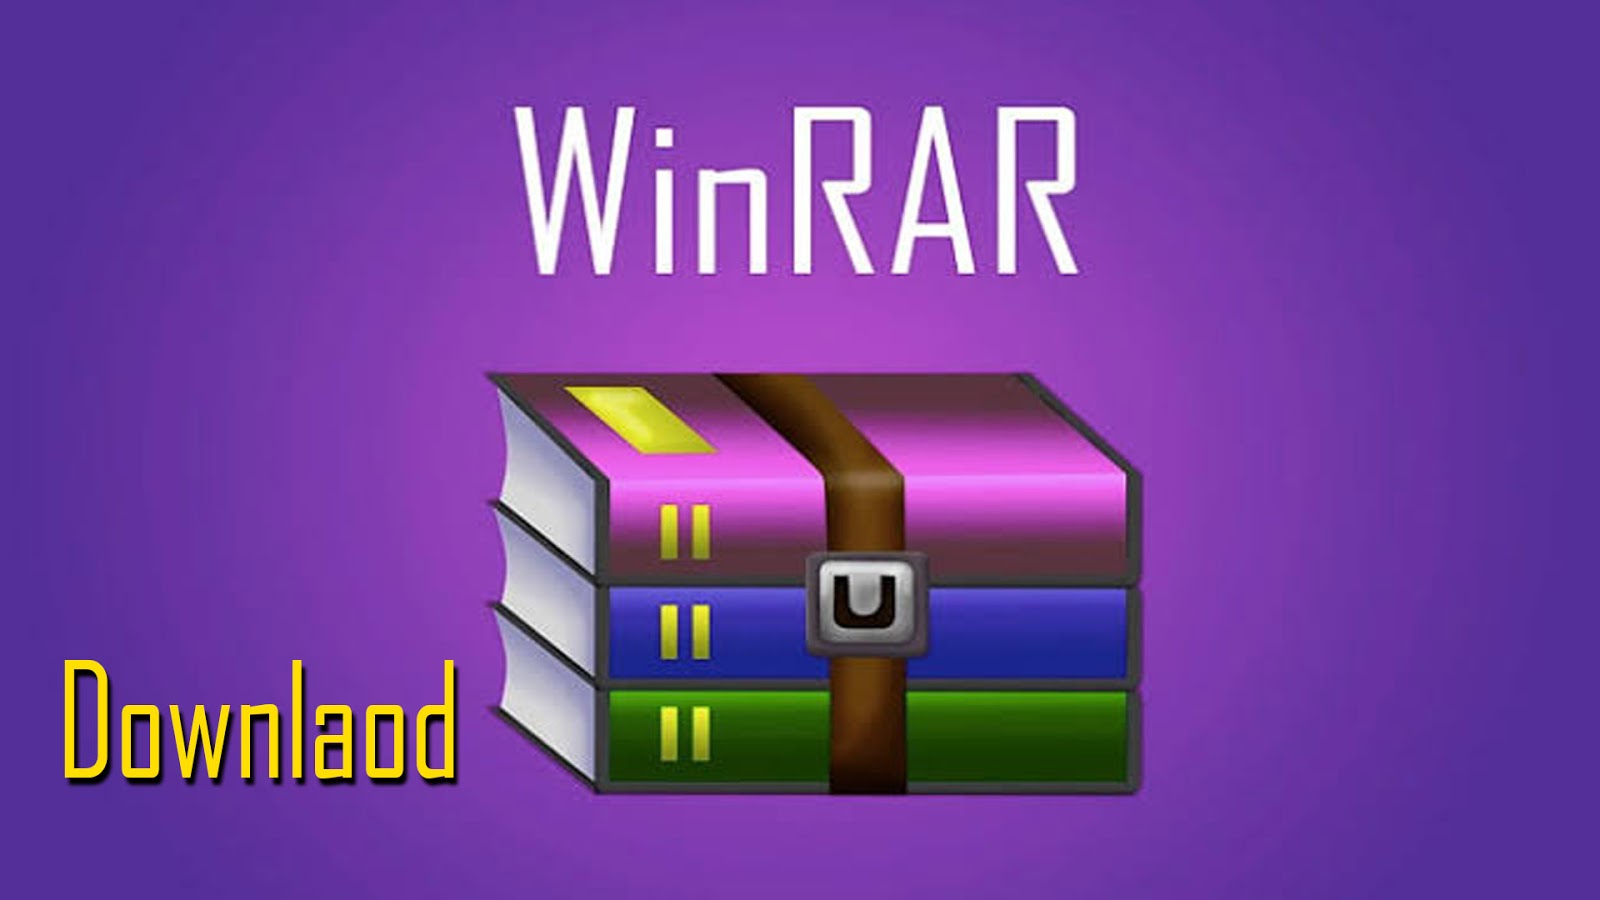 download winrar for windows 7 free 64 bit